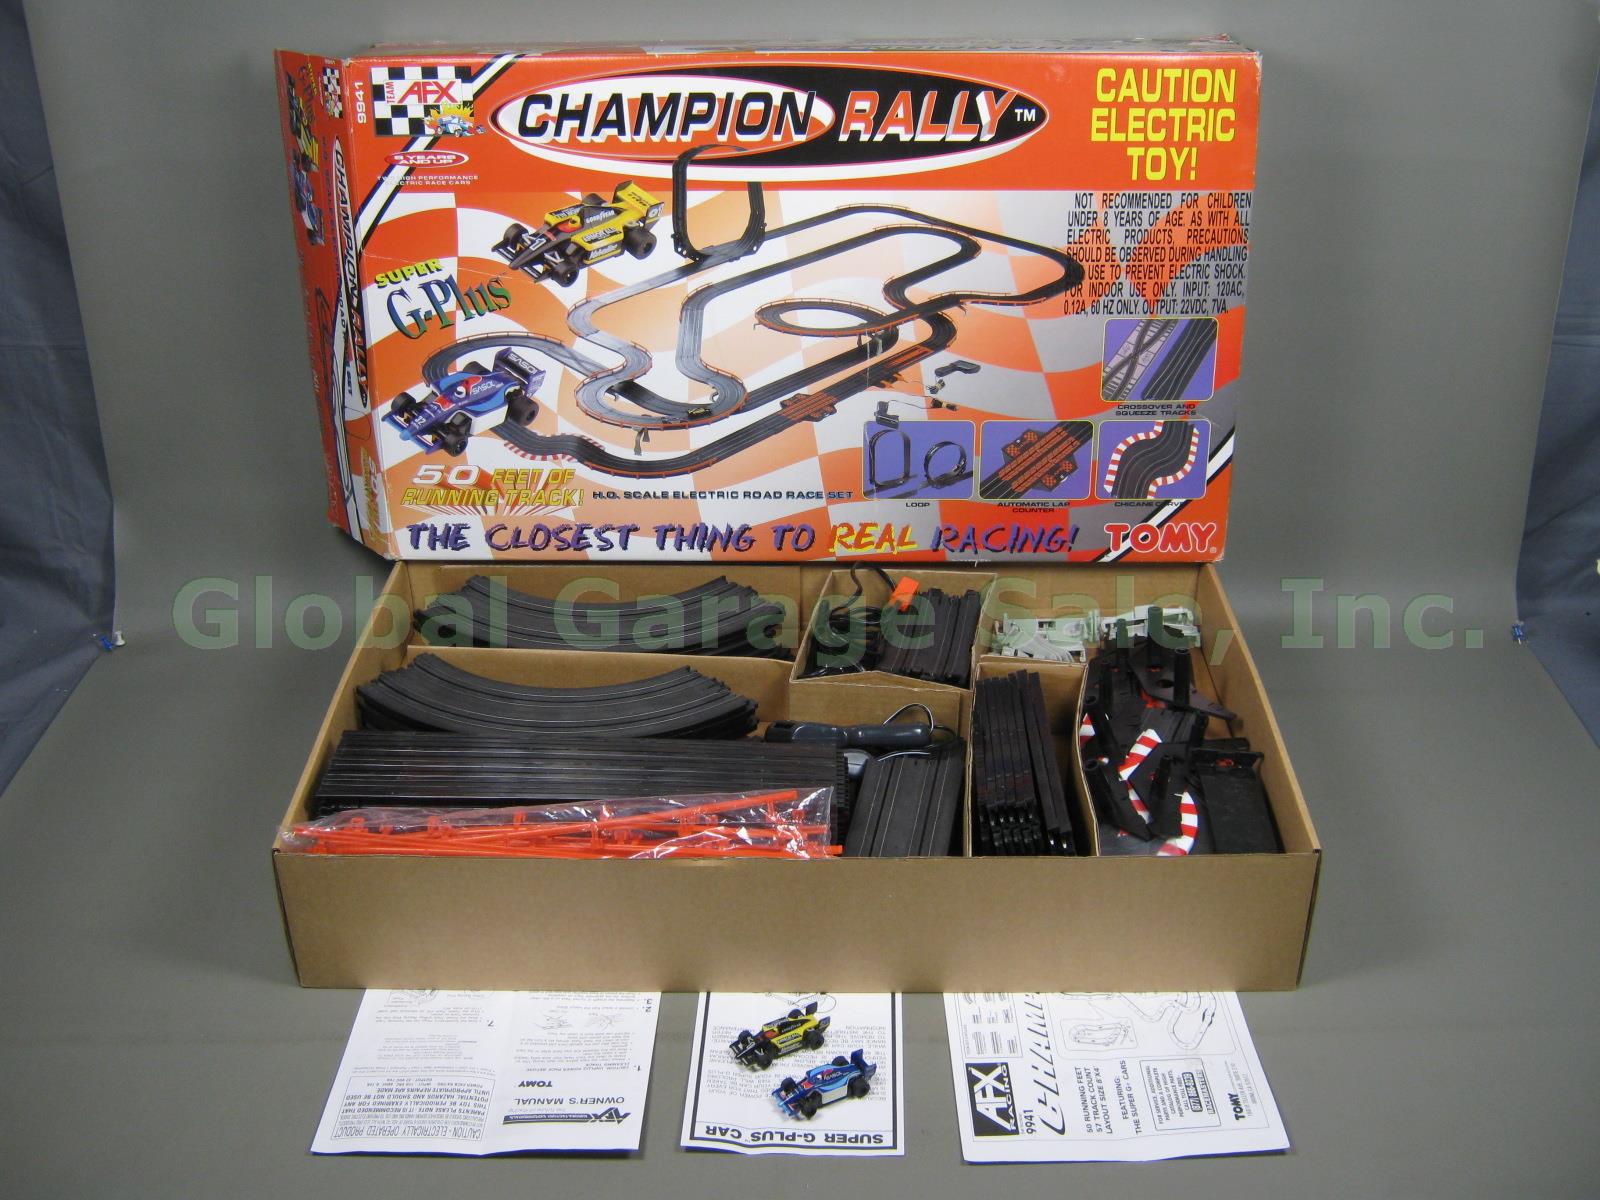 Tomy Team AFX Super G Plus Champion Rally Electric Slot Car Race Track Set #9941